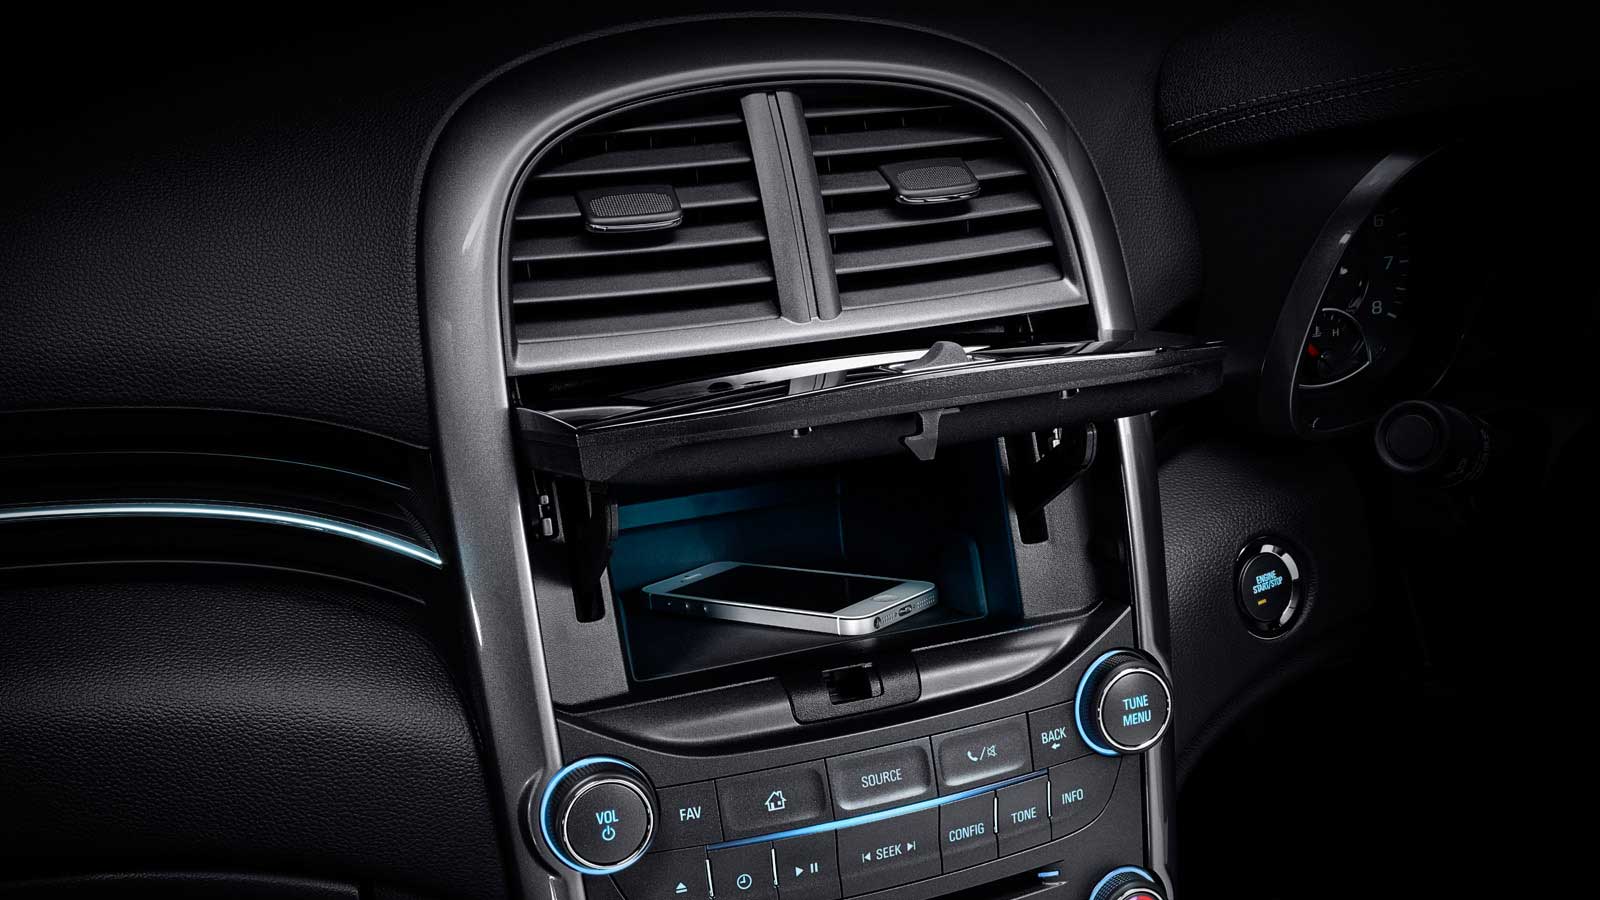 Holden Malibu CDX 2.0L Interior view